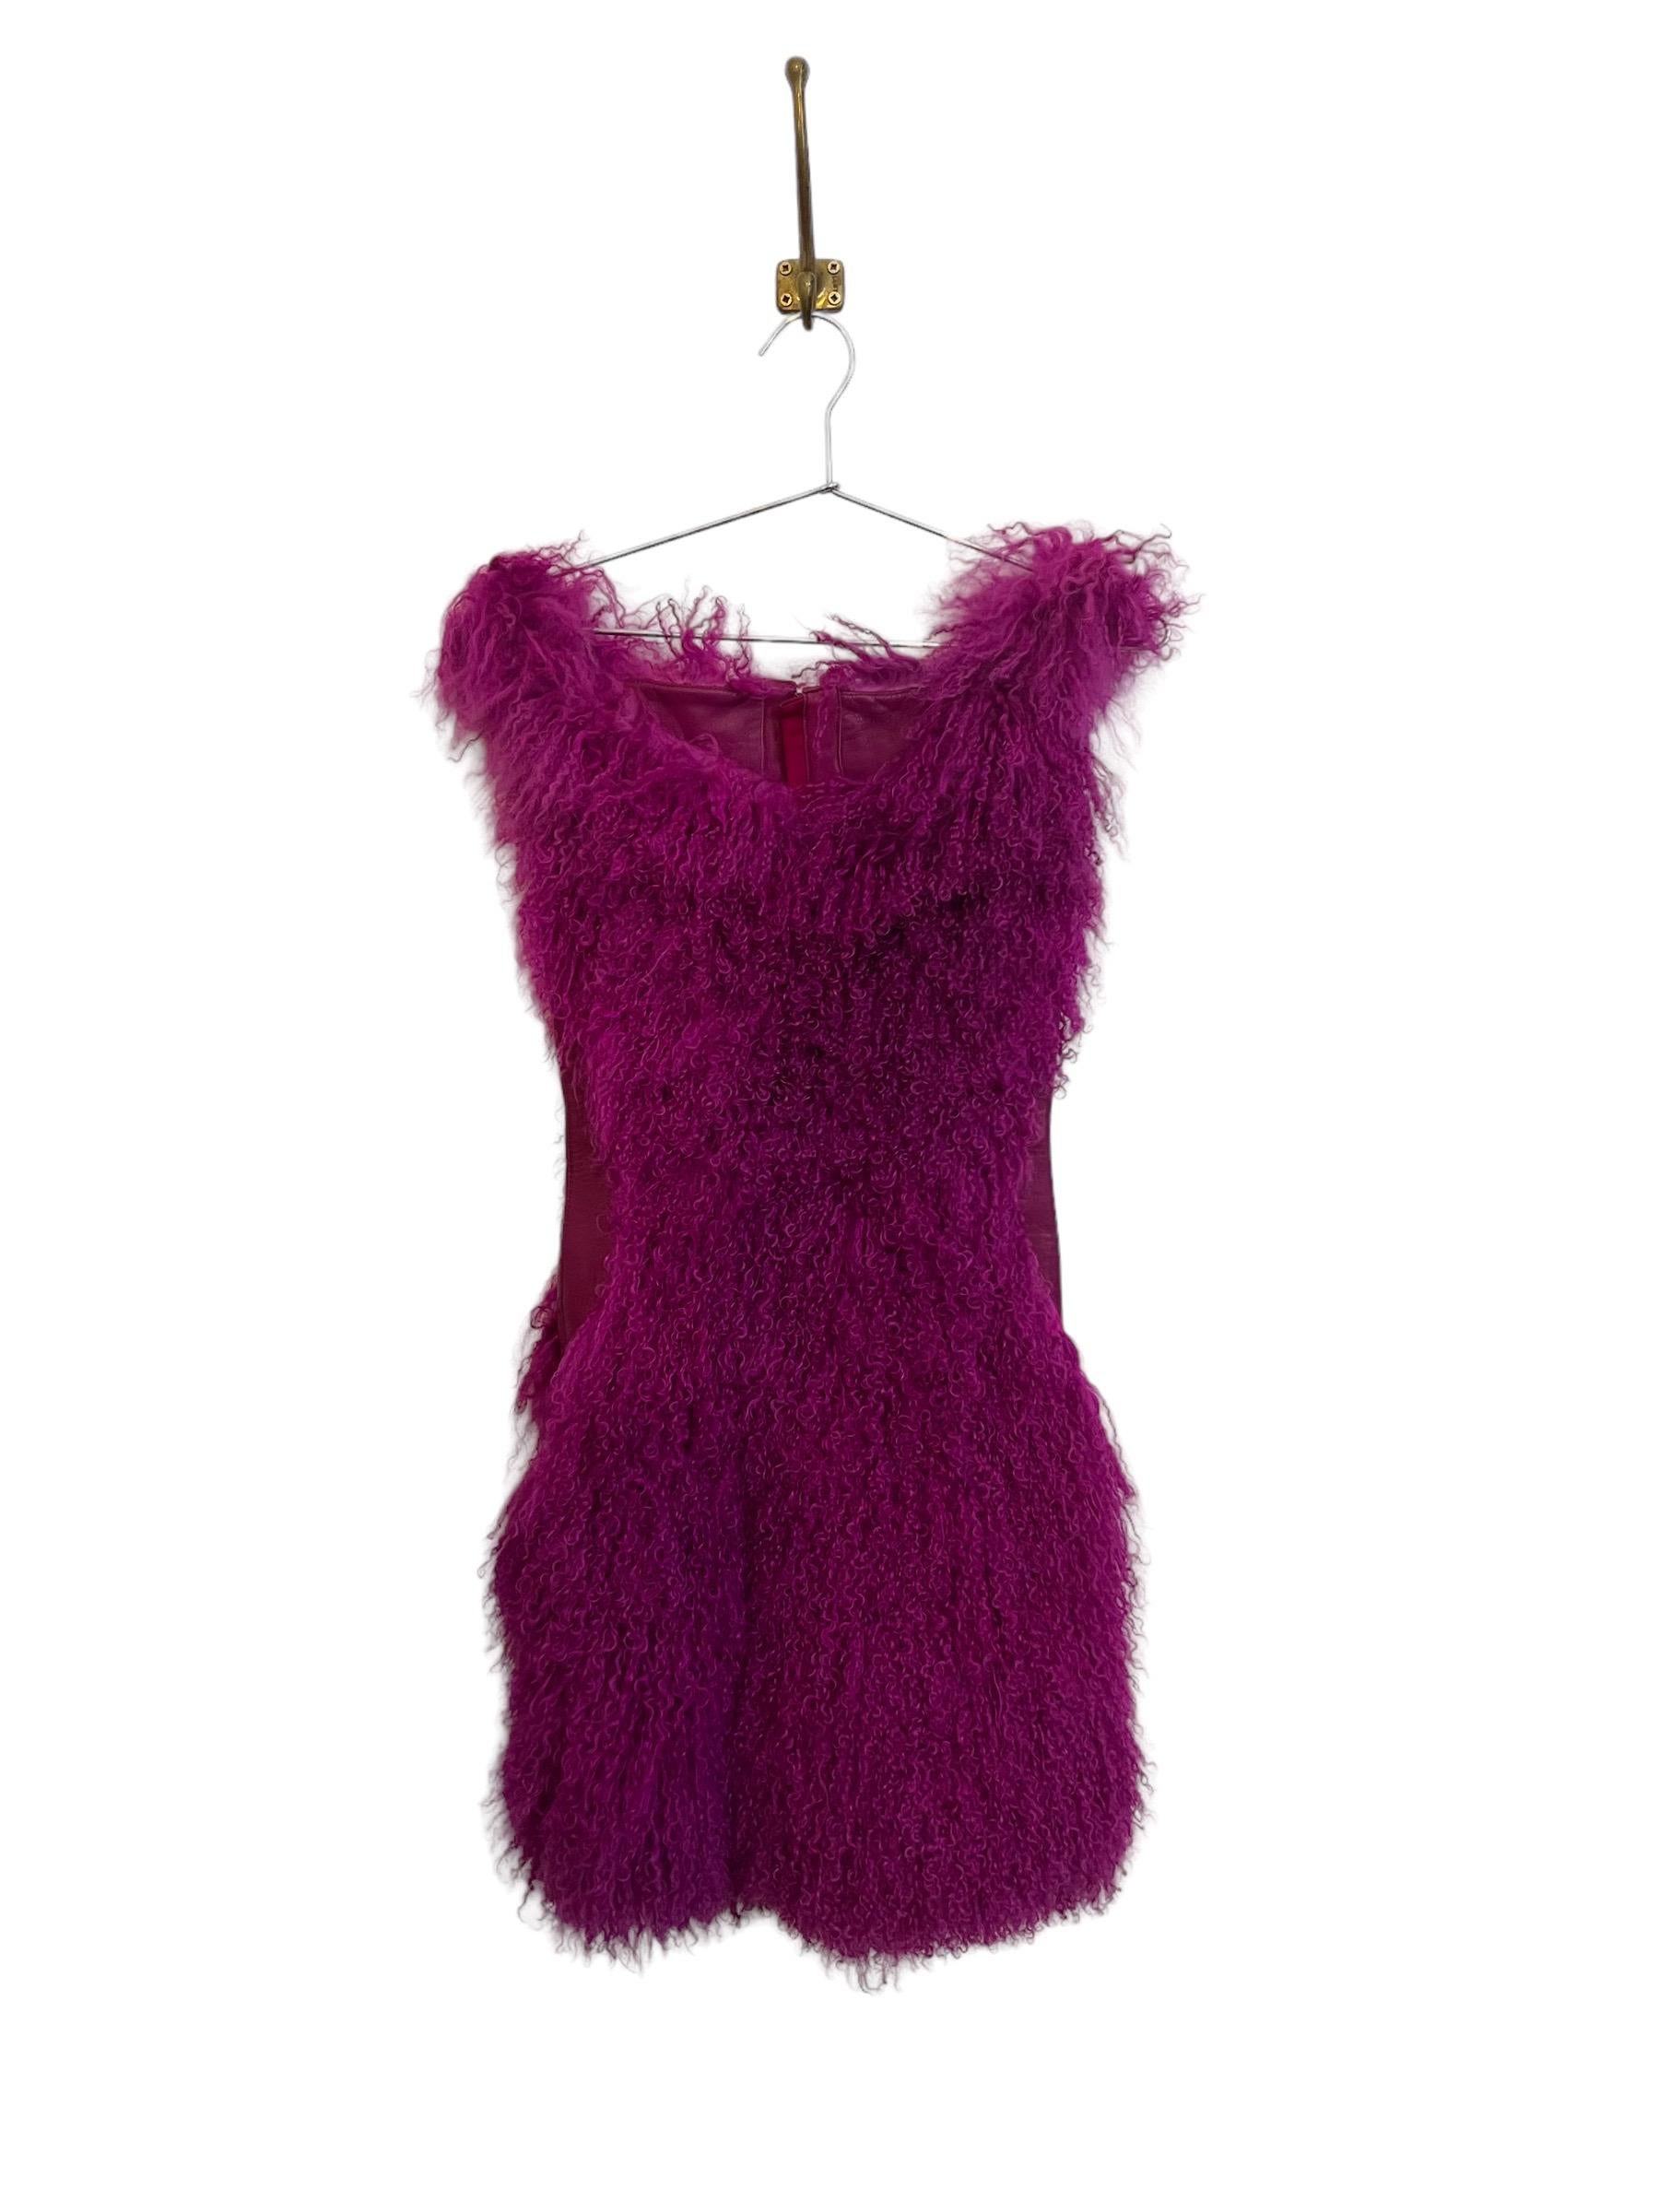 Outrageous VERSUS Versace 2012 Runway Magenta Purple Mongolian Lamb Fur Dress For Sale 4